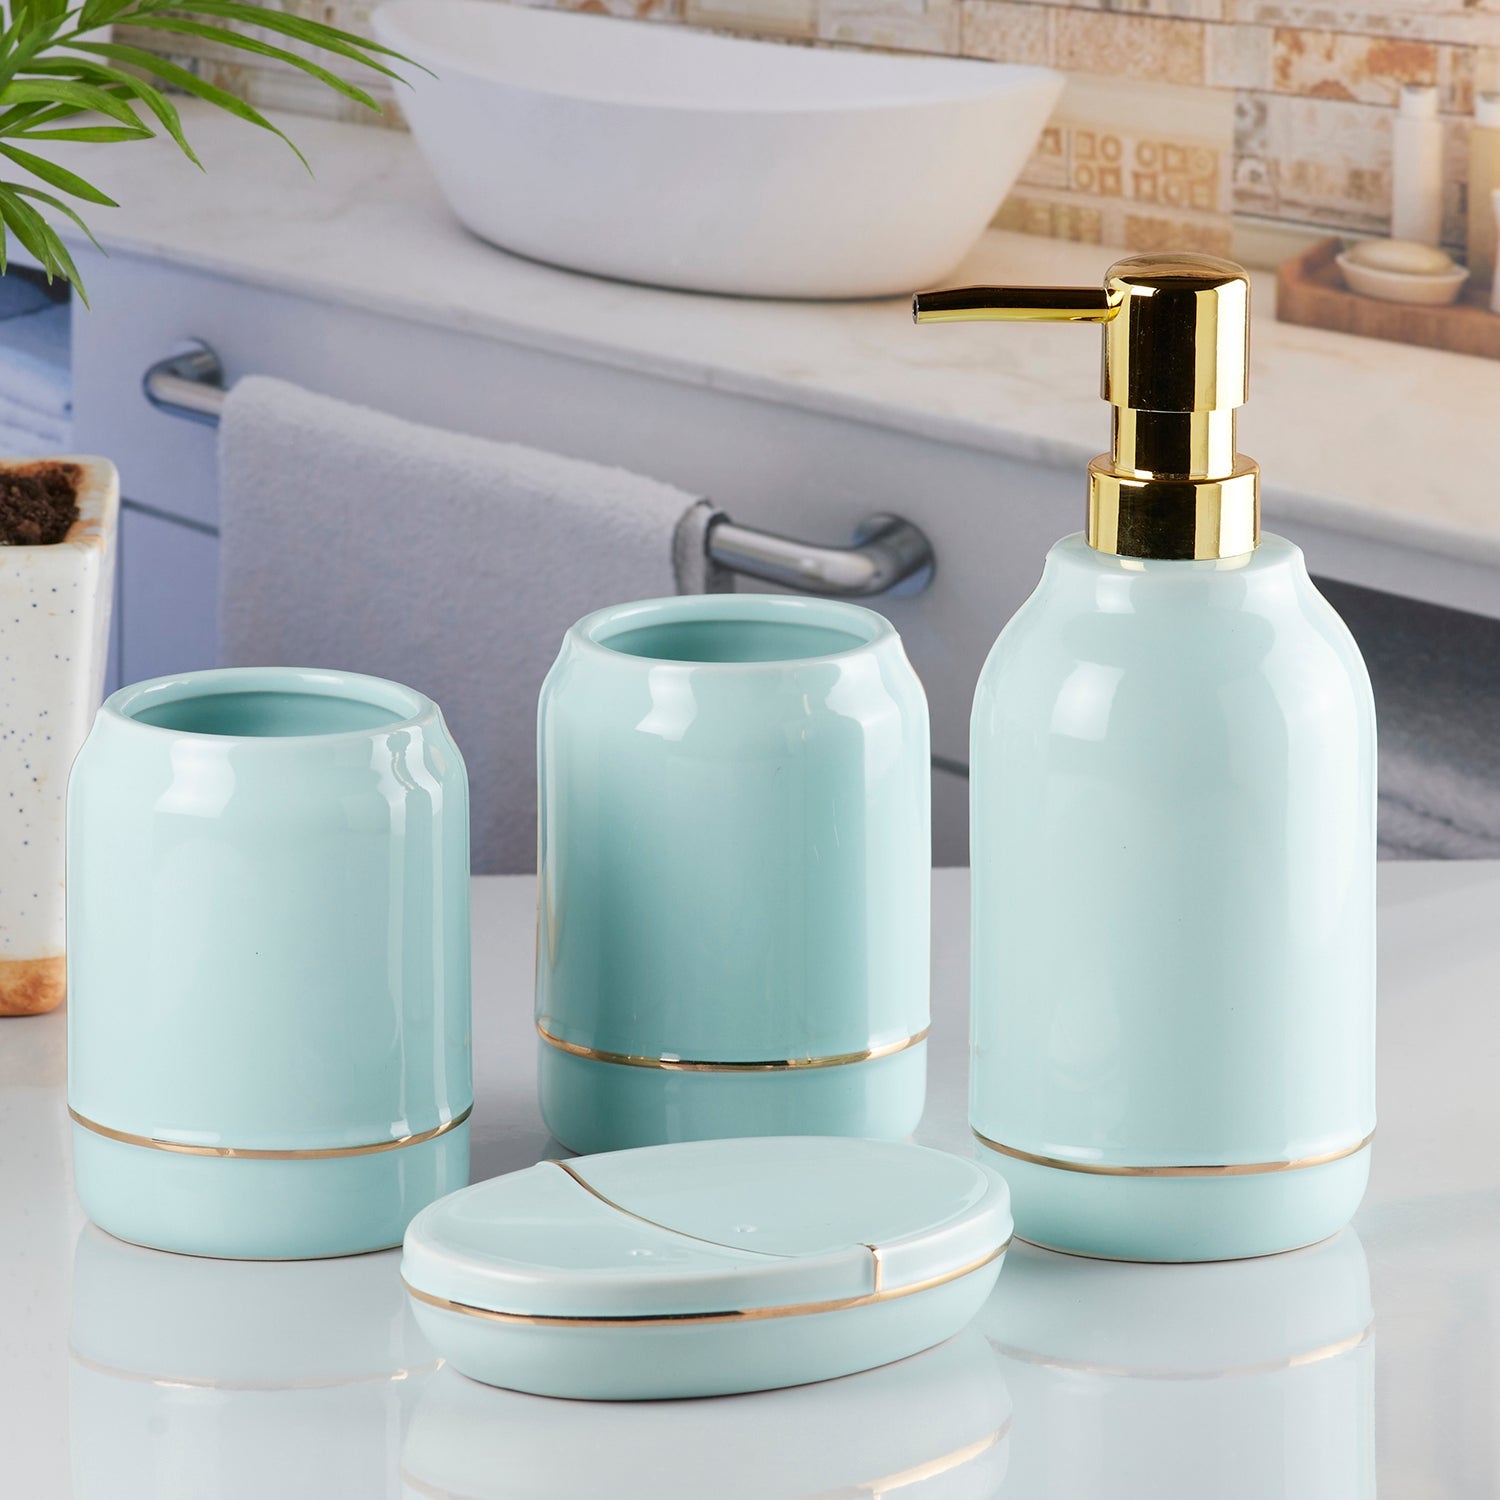 Ceramic Bathroom Accessories Set of 4 Bath Set with Soap Dispenser (8489)